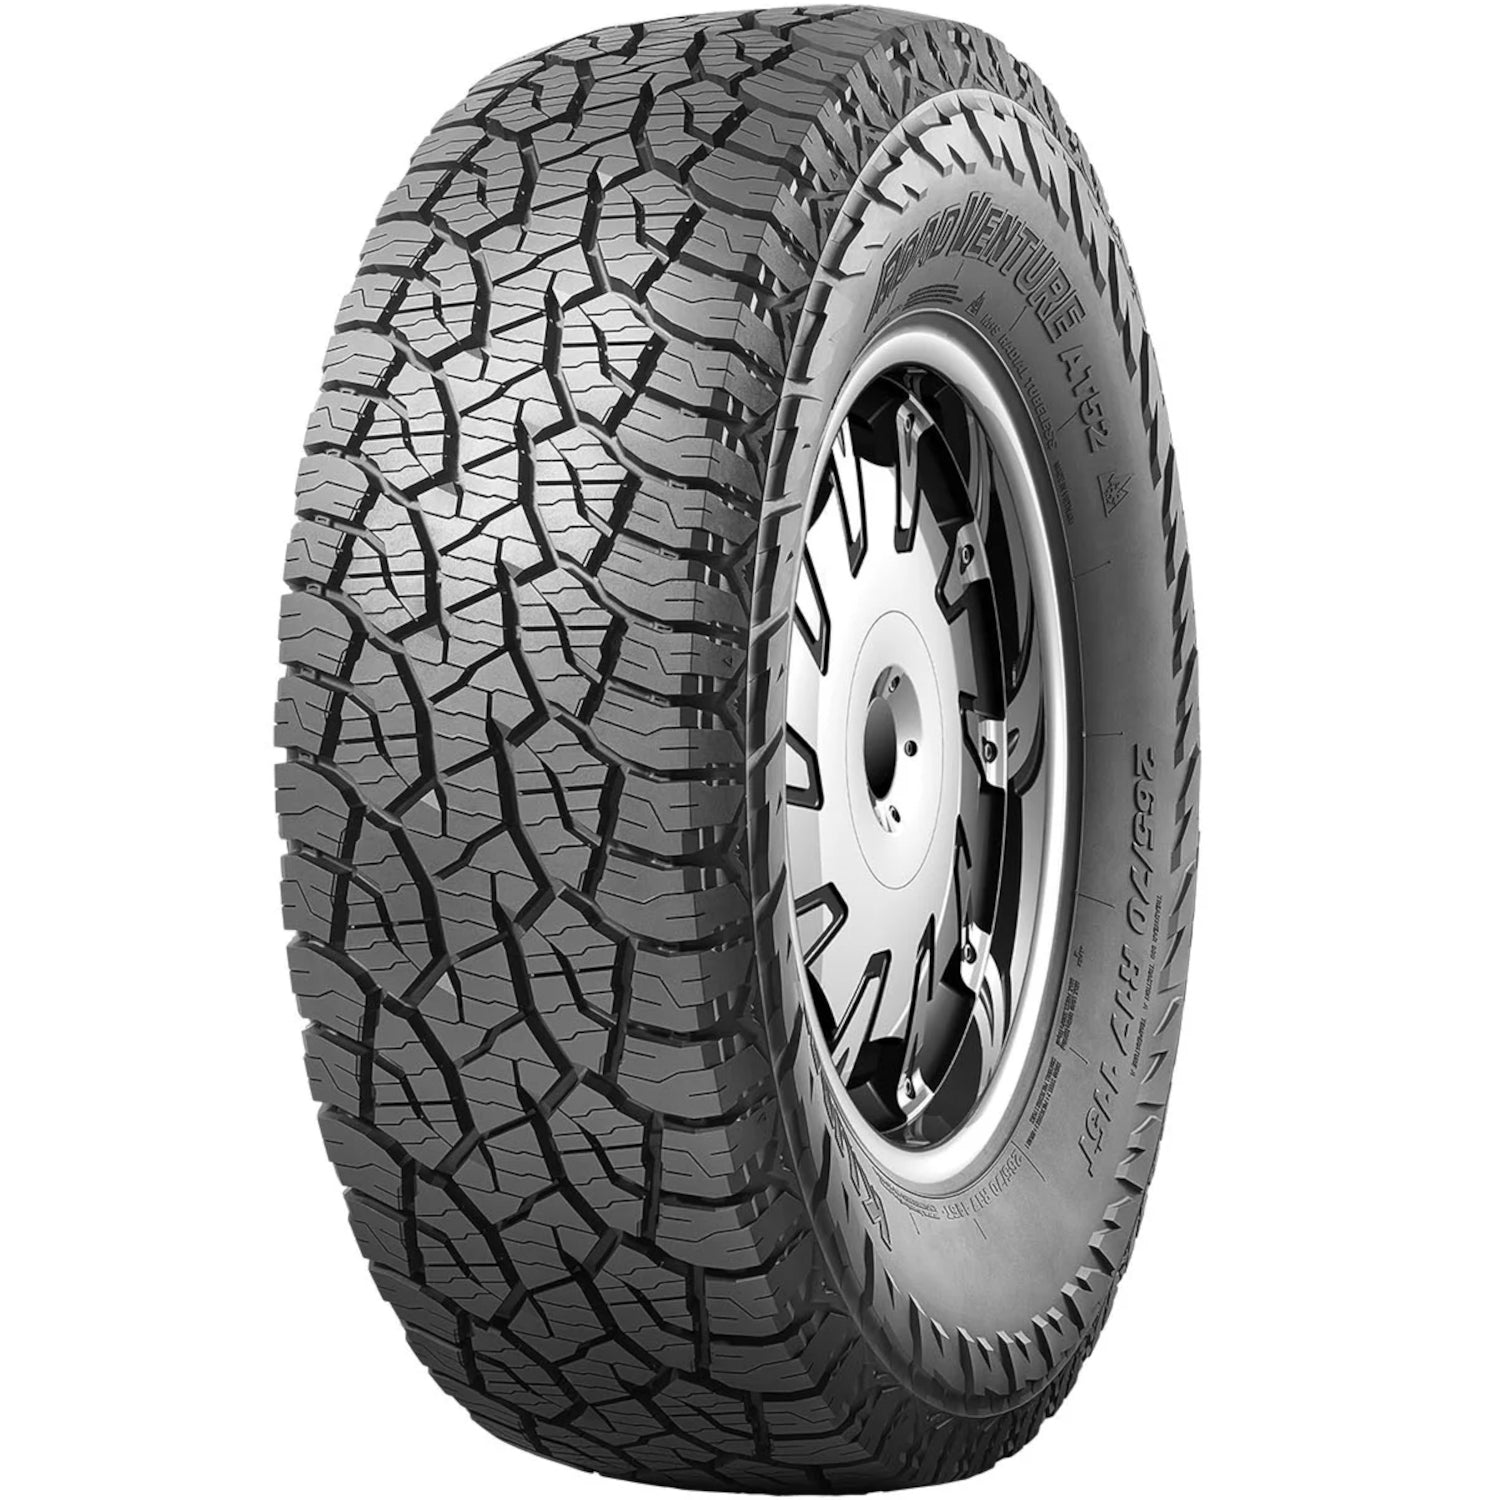 KUMHO ROAD VENTURE AT52 245/70R17 (30.6X9.7R 17) Tires